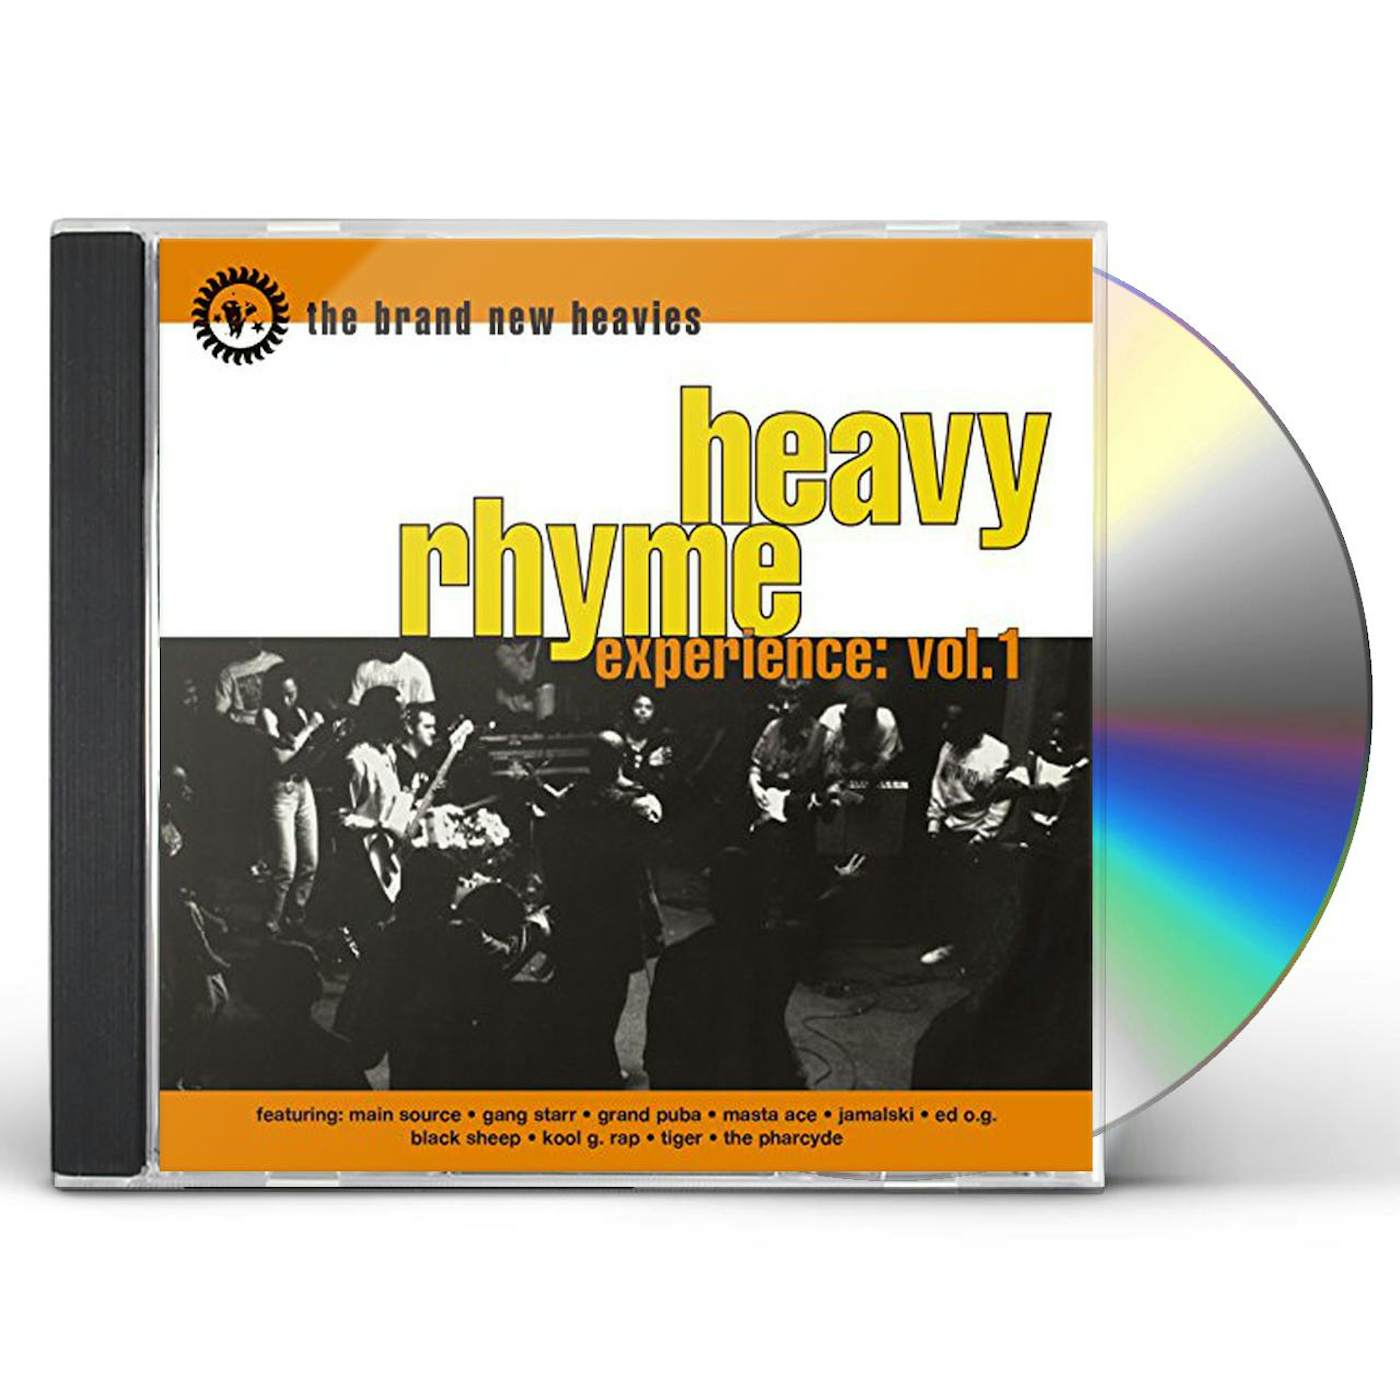 The Brand New Heavies HEAVY RHYME EXPERIENCE VOL. 1 CD